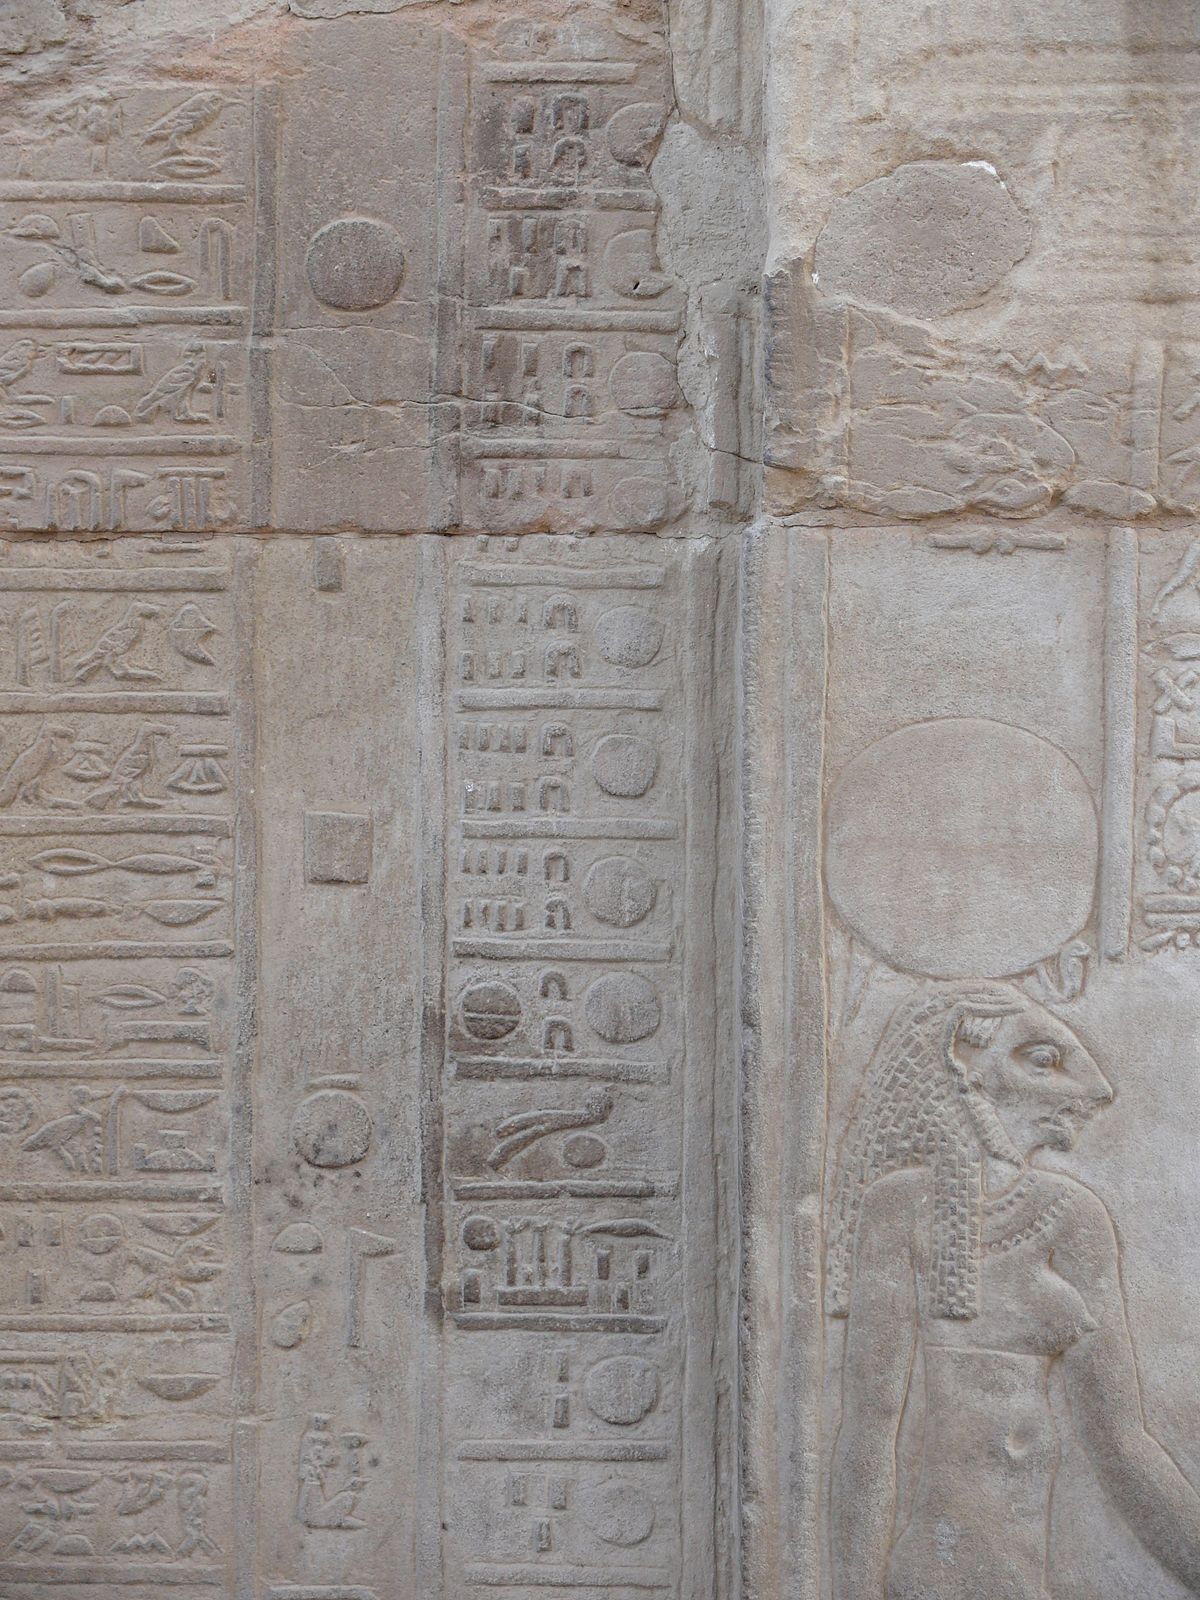 Egyptian Calendar - Wikipedia